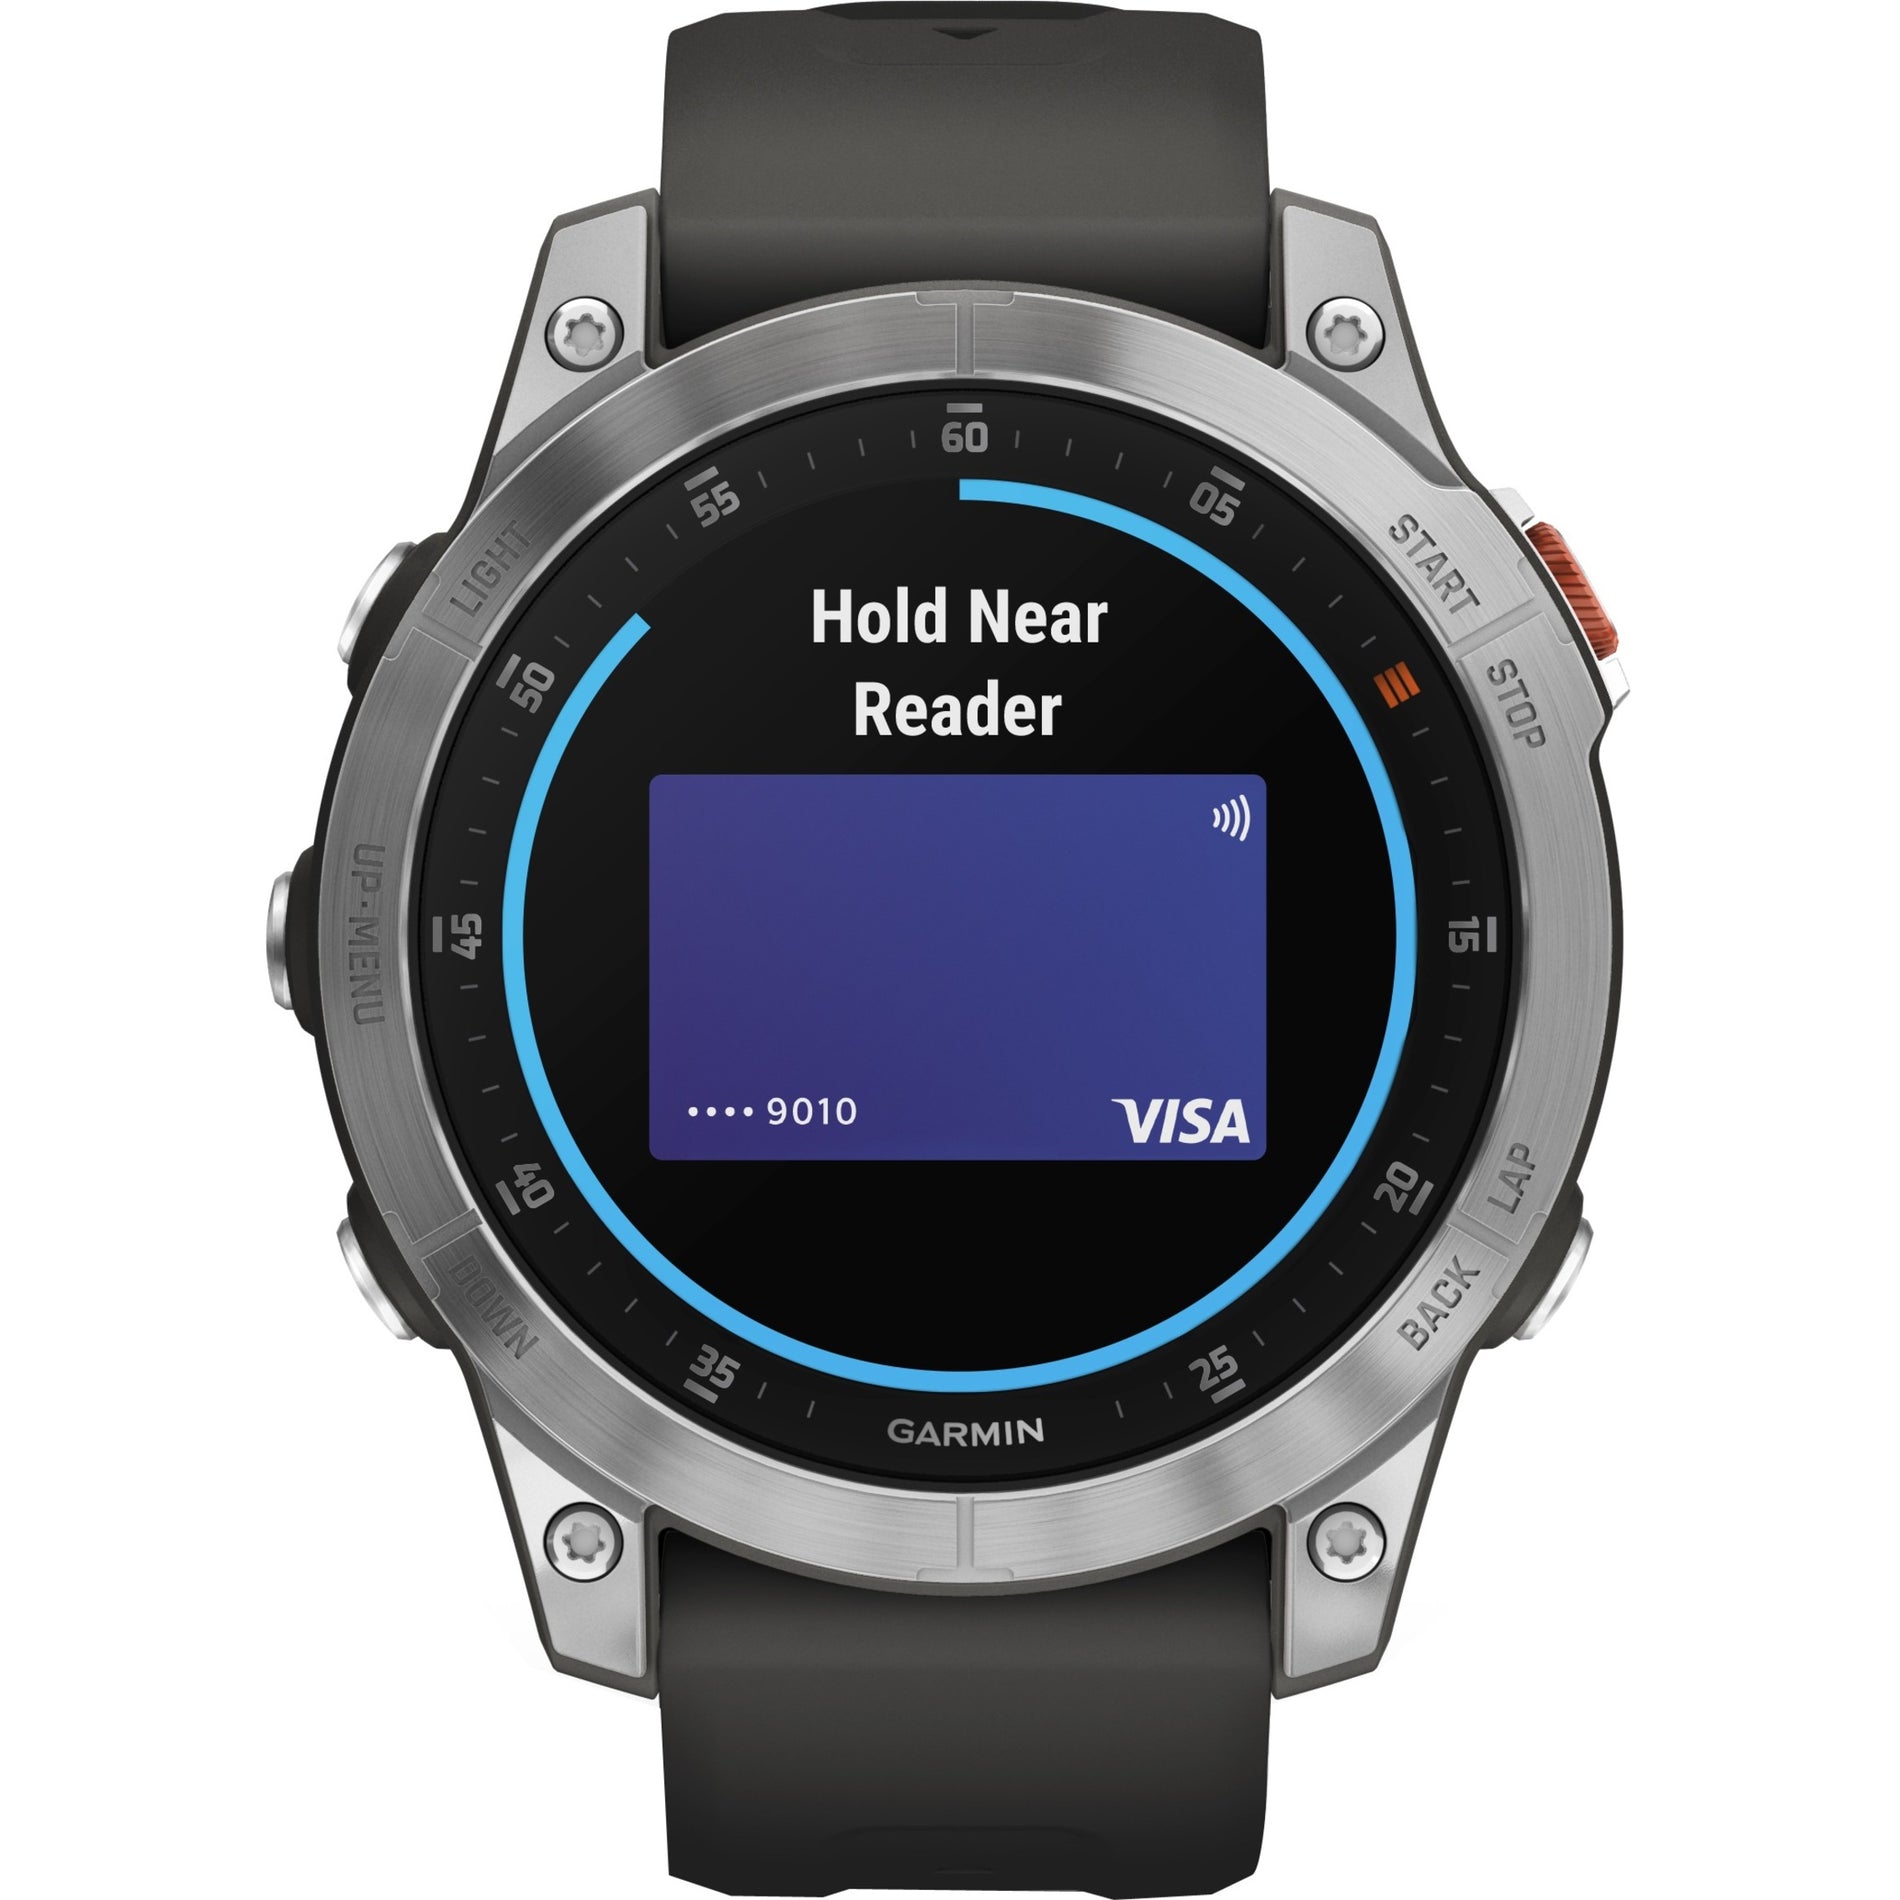 Garmin 010-02582-00 epix Smart Watch, Water Resistant, AMOLED Display, 1.3" Screen, 16GB Memory, 1 Year Warranty [Discontinued]